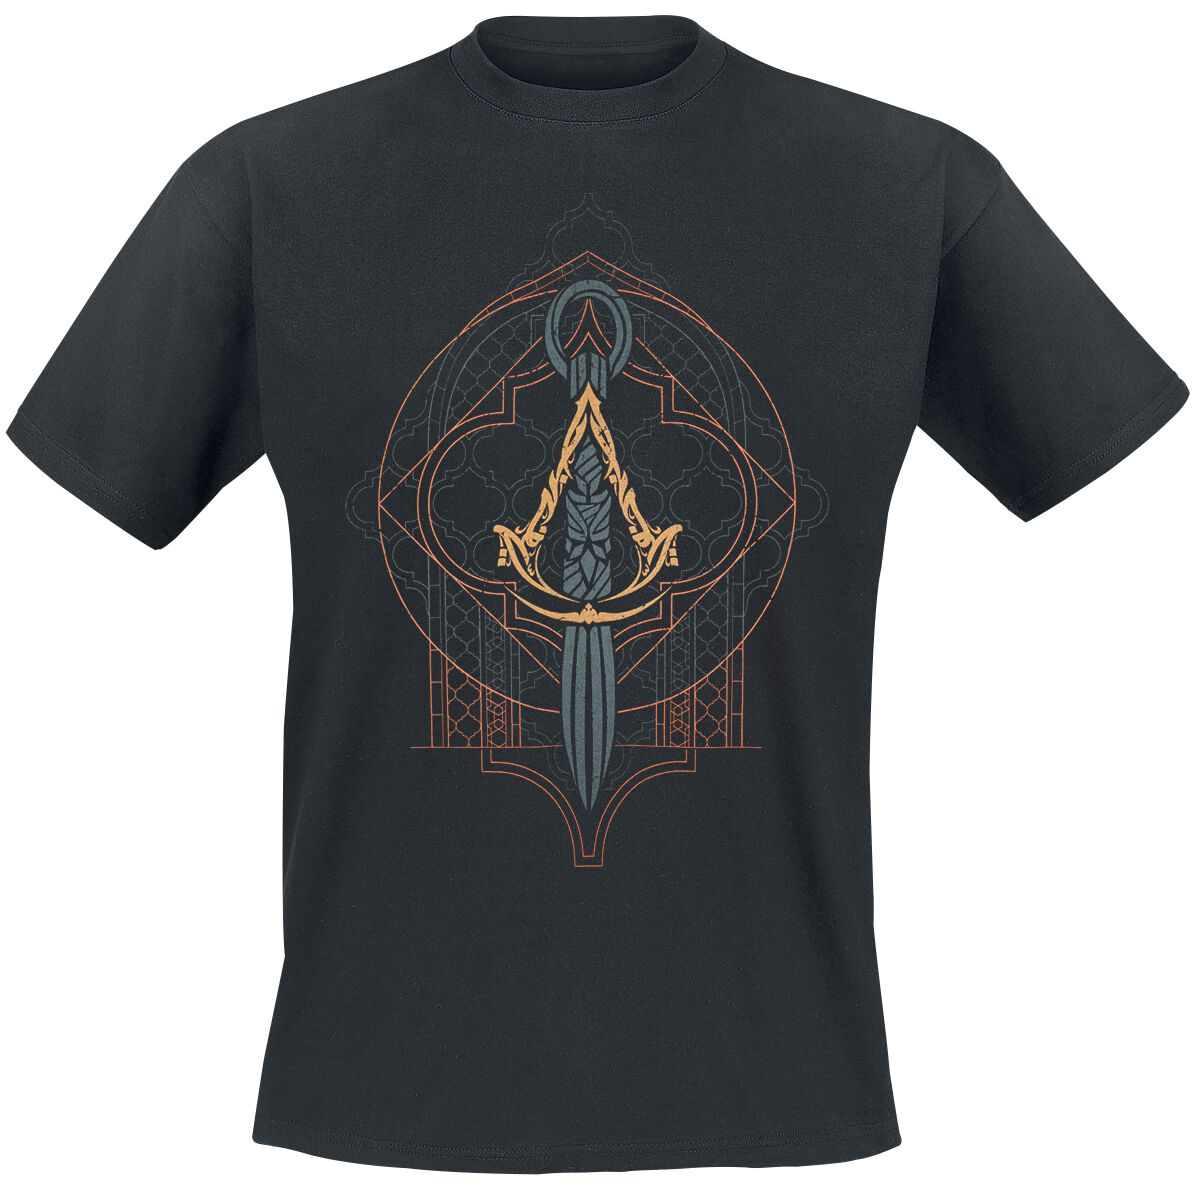 Assassin`s Creed Mirage - Emblem T-Shirt schwarz in M